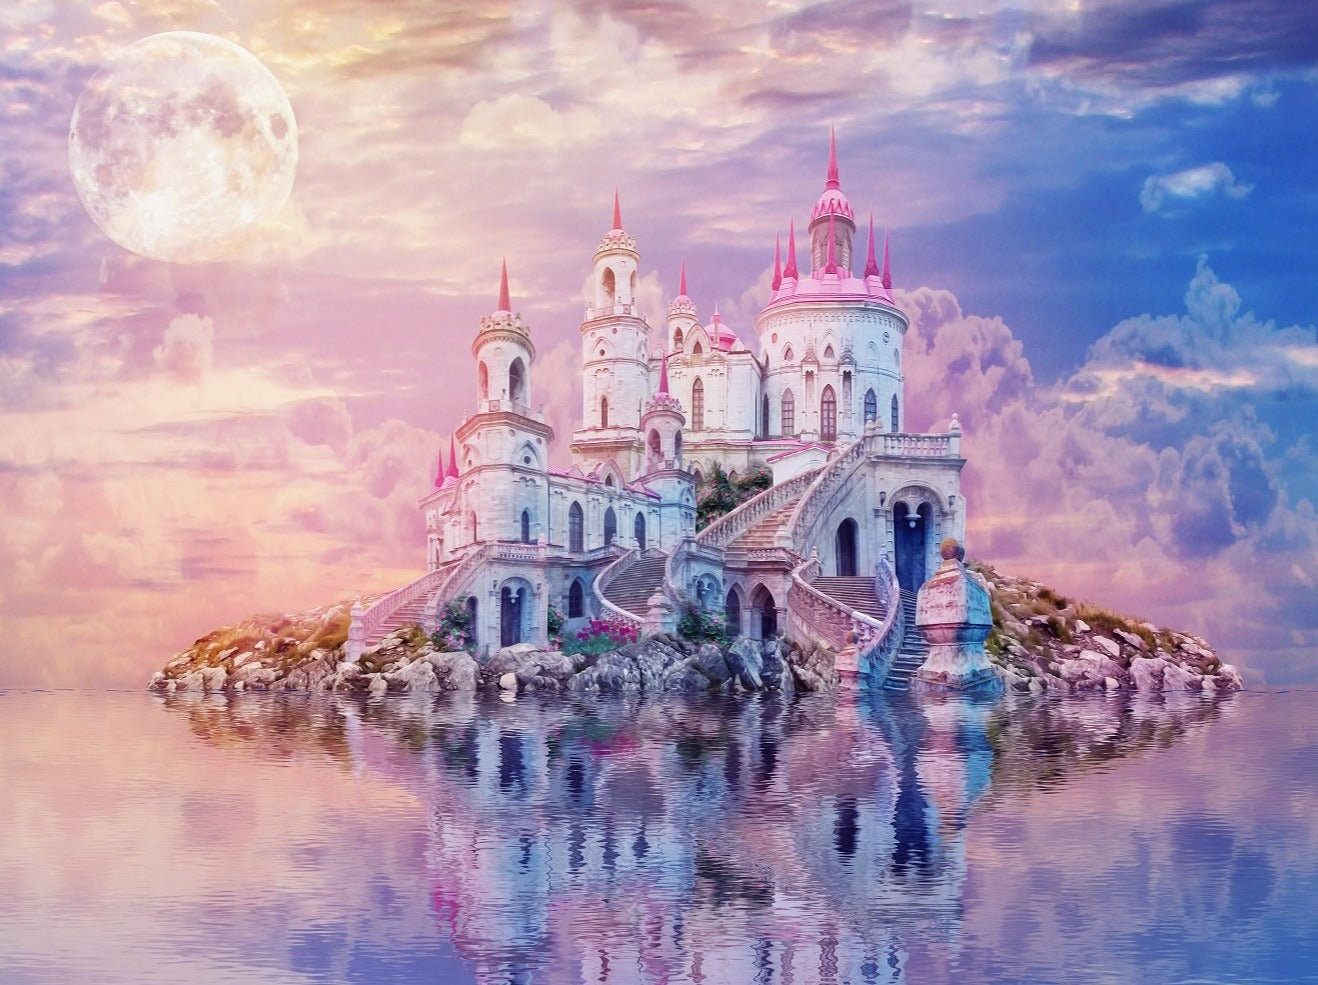 Water Fantasy Castle With Moon Building Backdrop IBD-246833